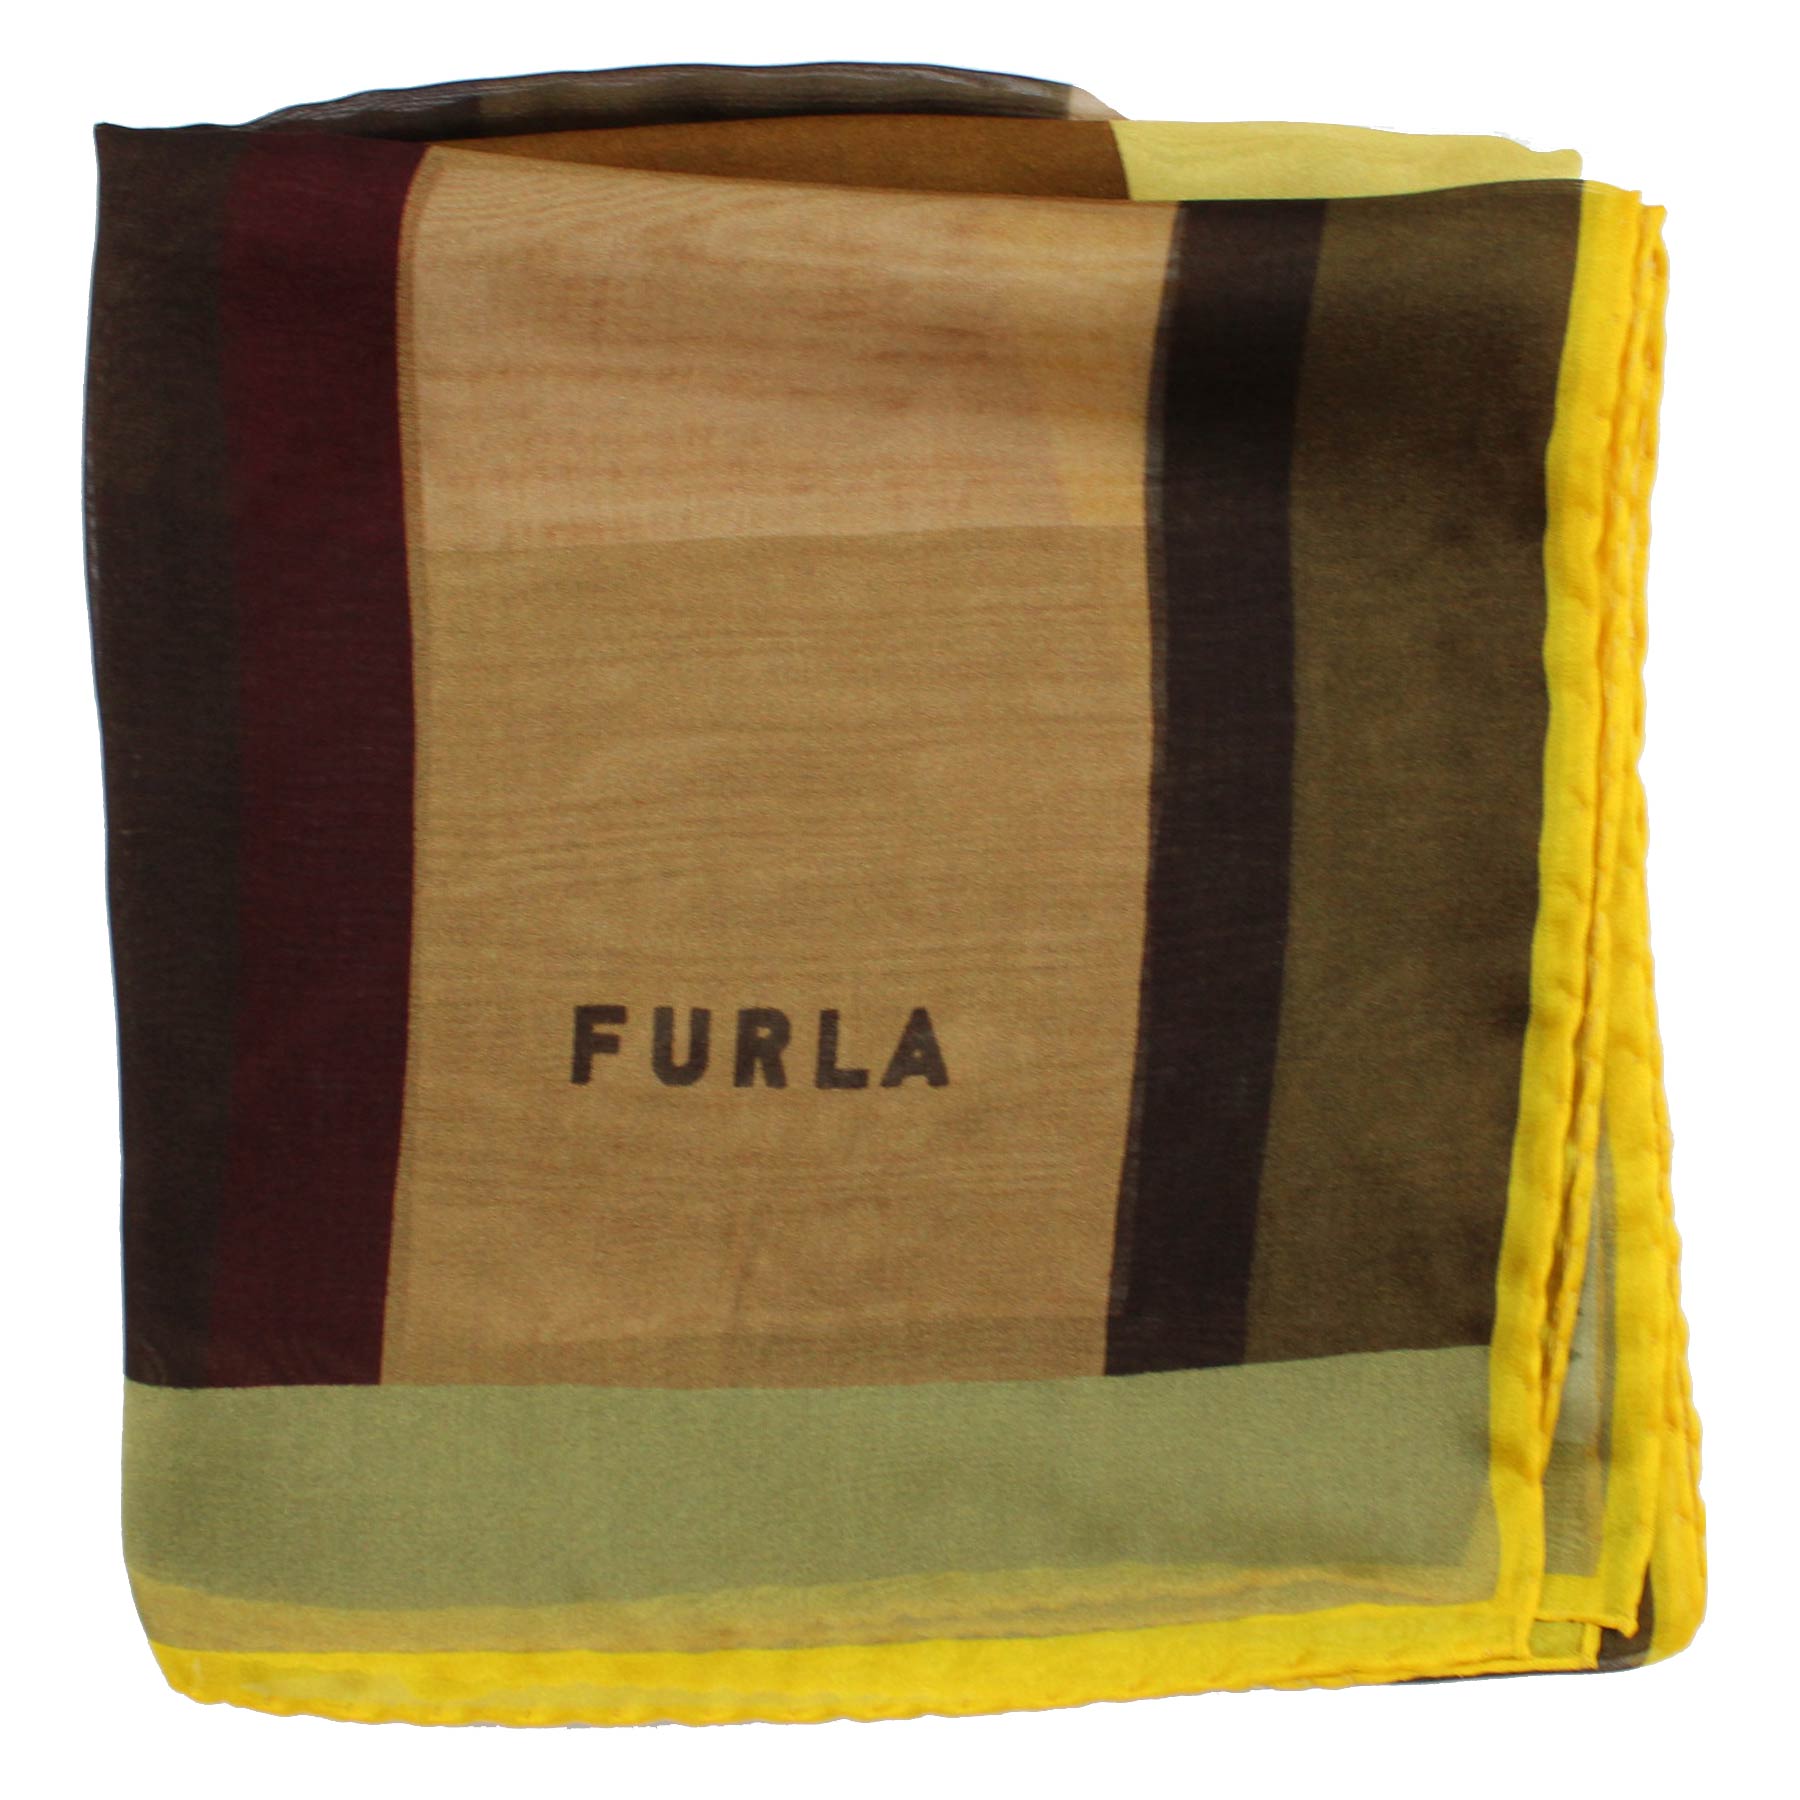 Furla Scarf Brown Green Oversized Logo Design - Extra Large 47" Square Chiffon Silk Shawl SALE